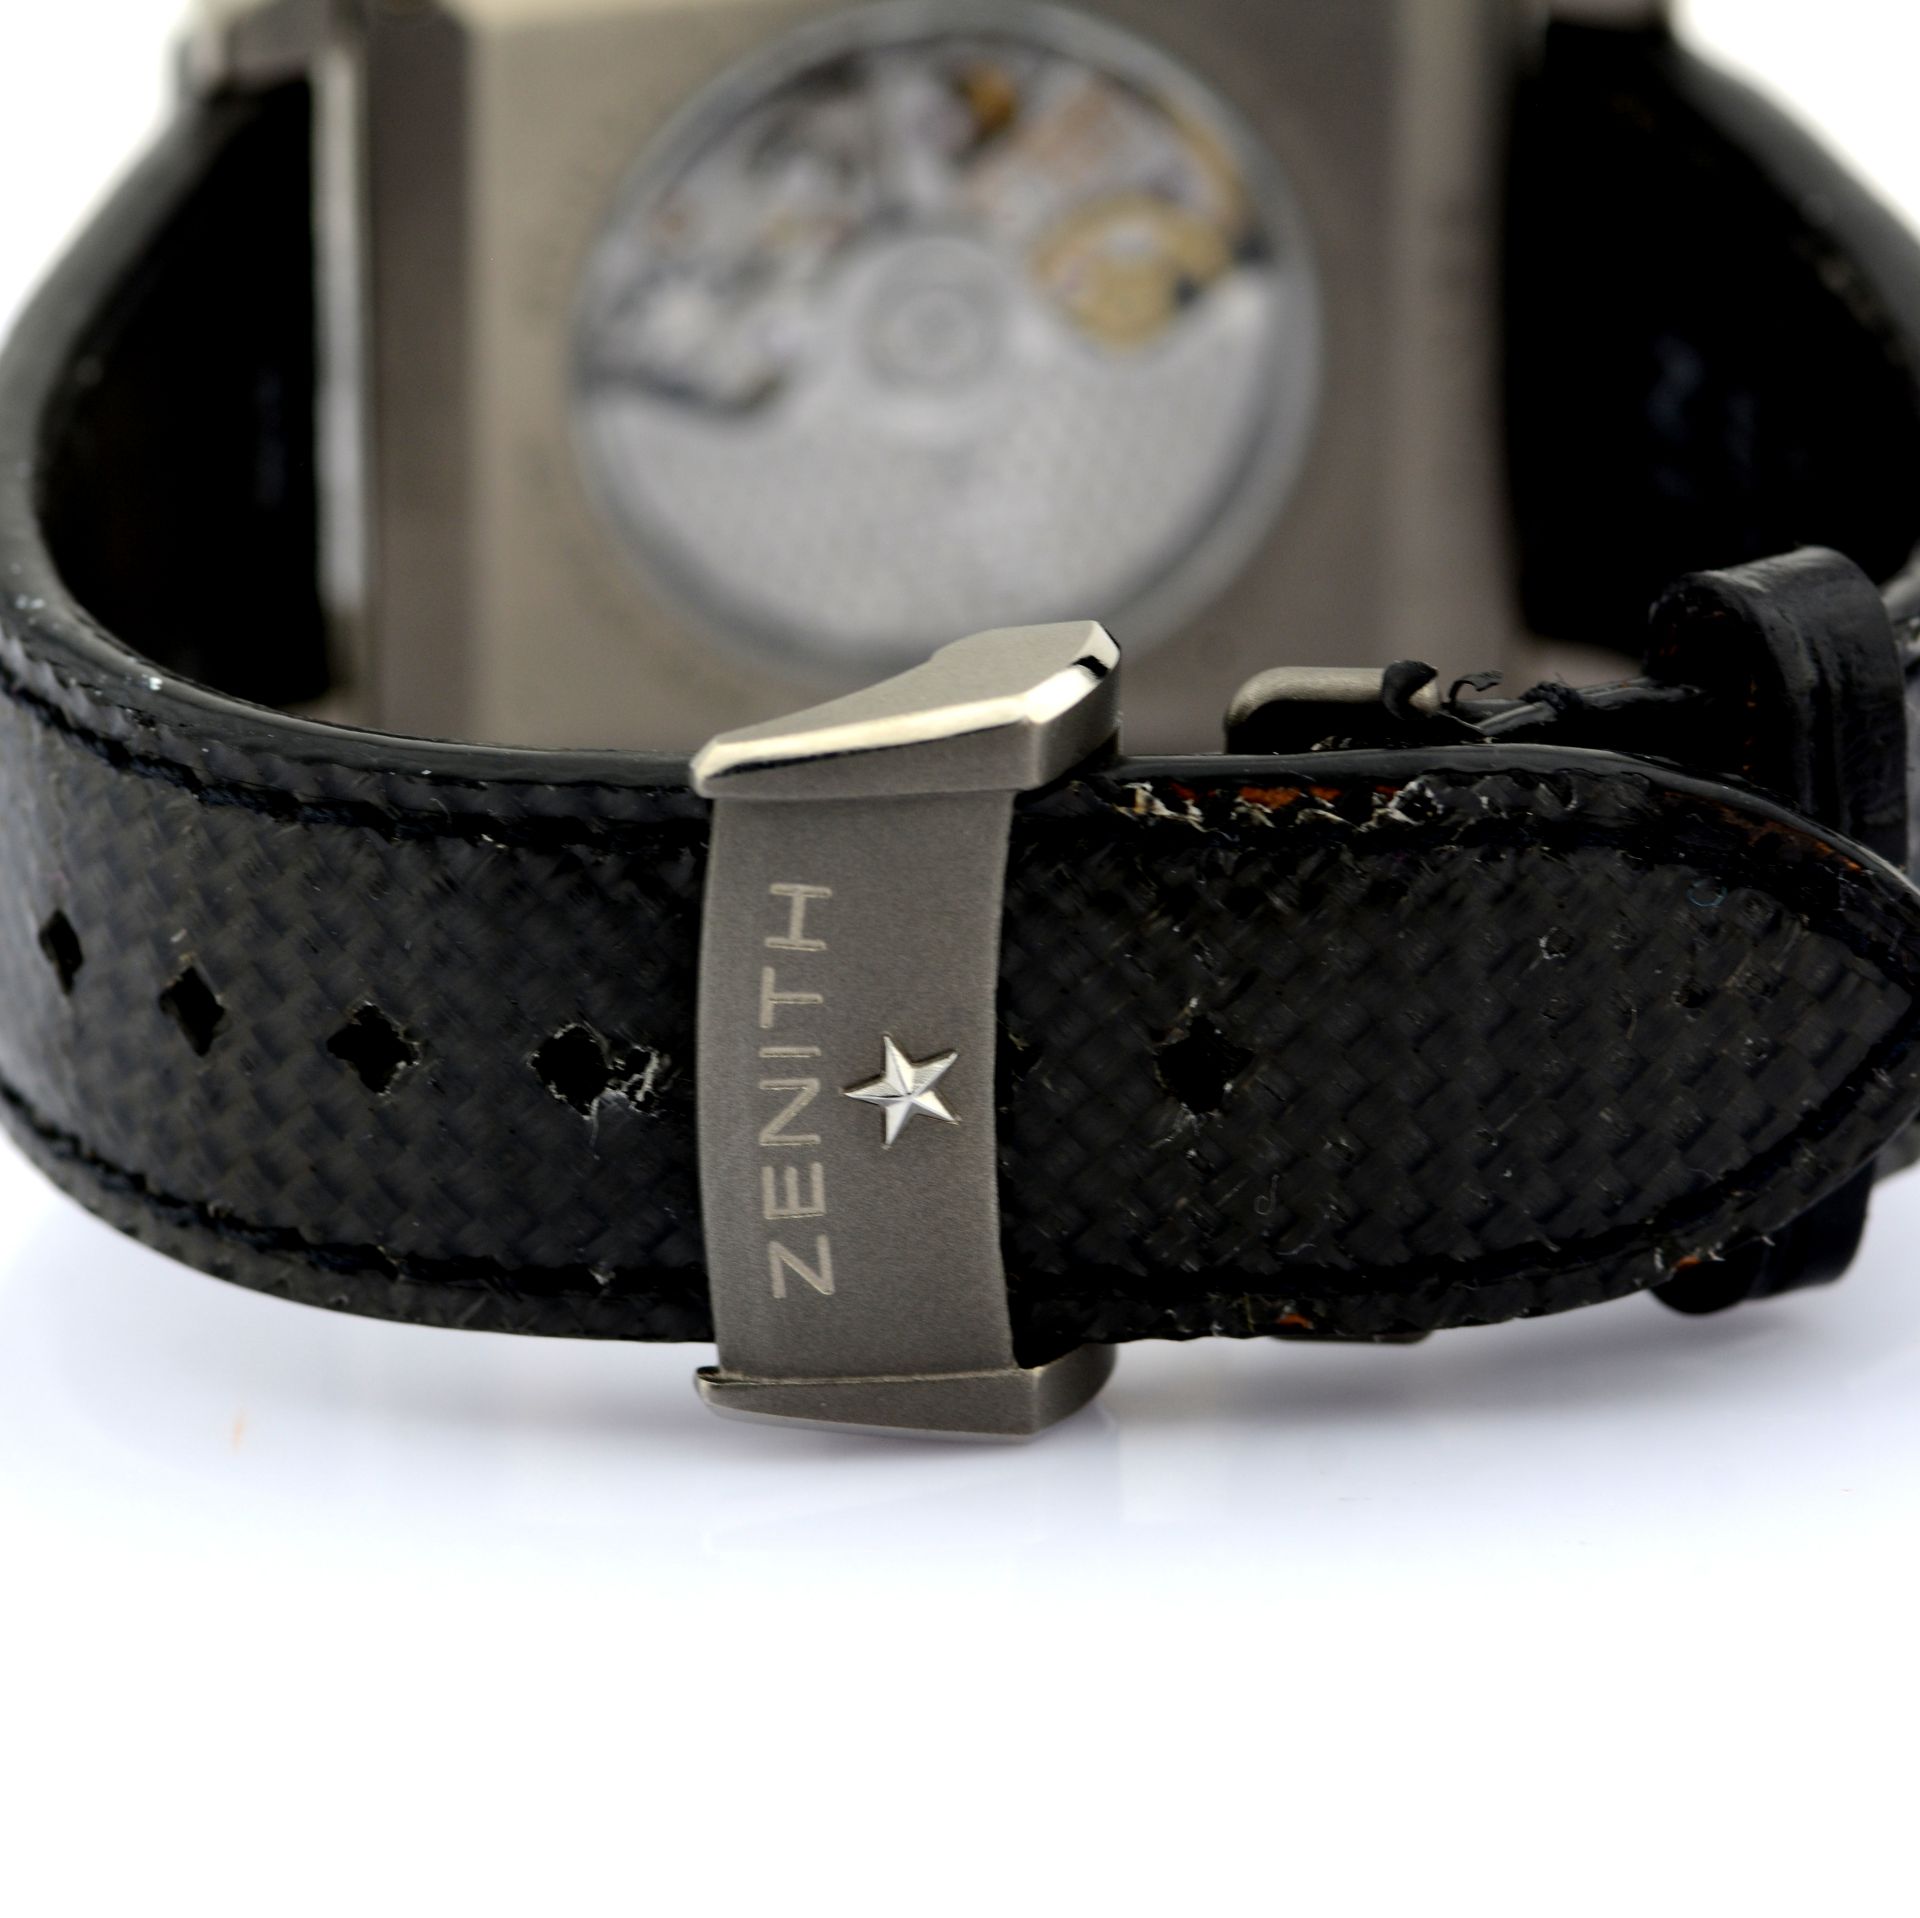 Zenith / Port Royal Open Concept - Gentlmen's Titanium Wrist Watch - Image 9 of 13